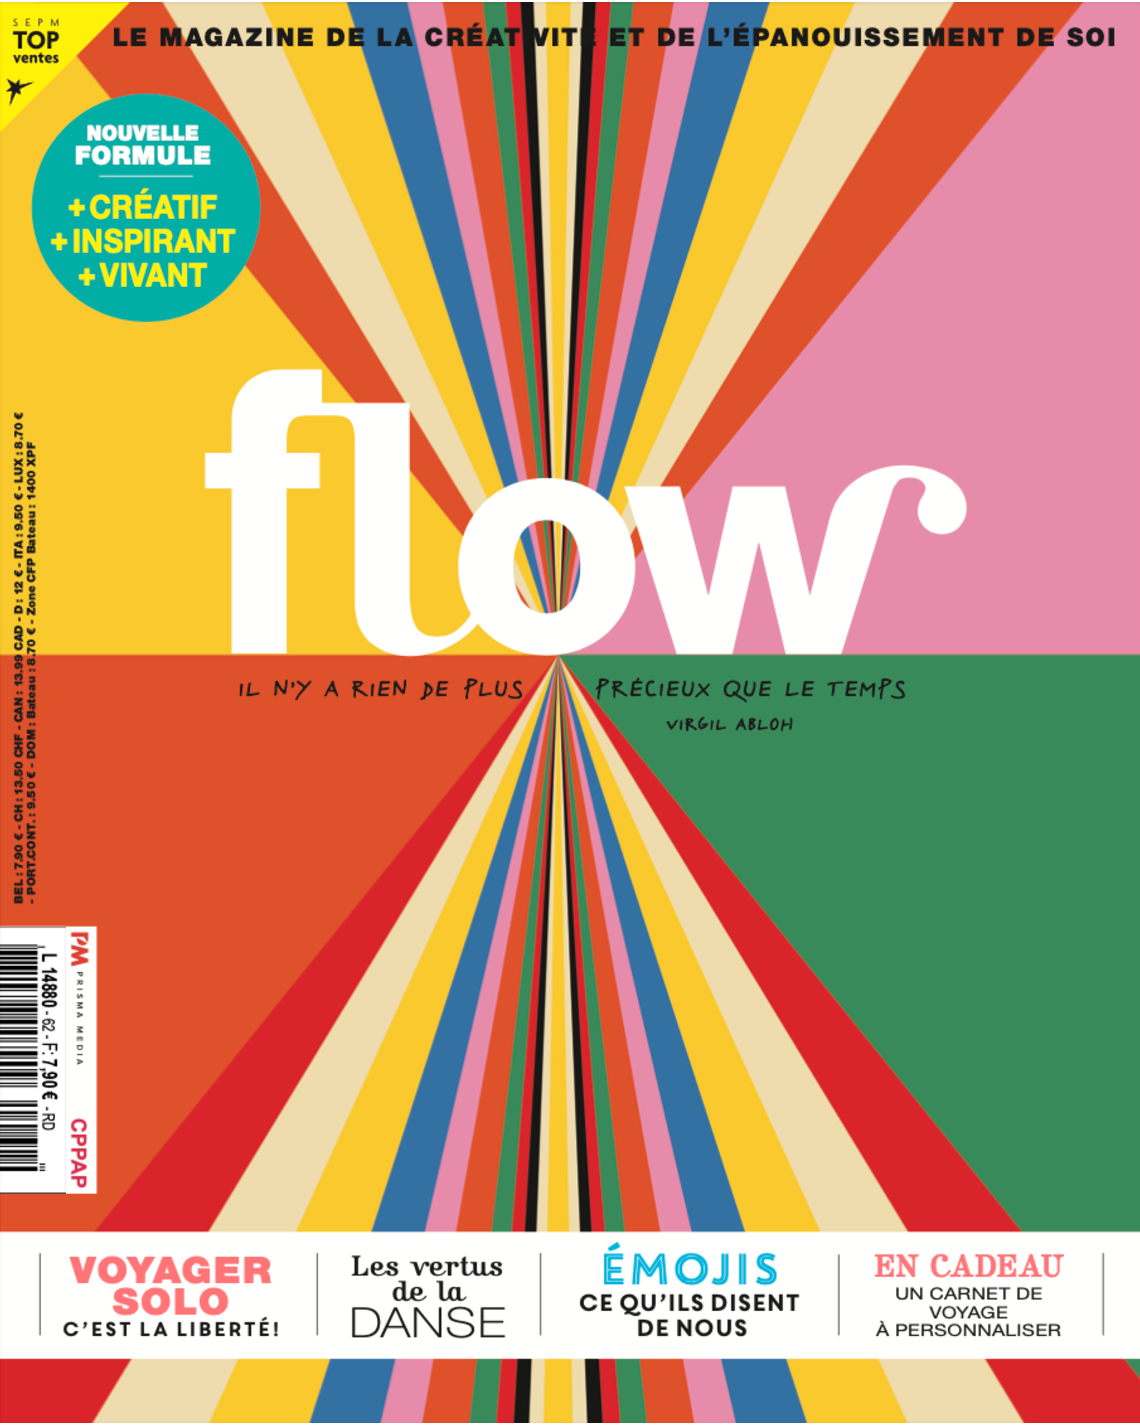 Flow 62